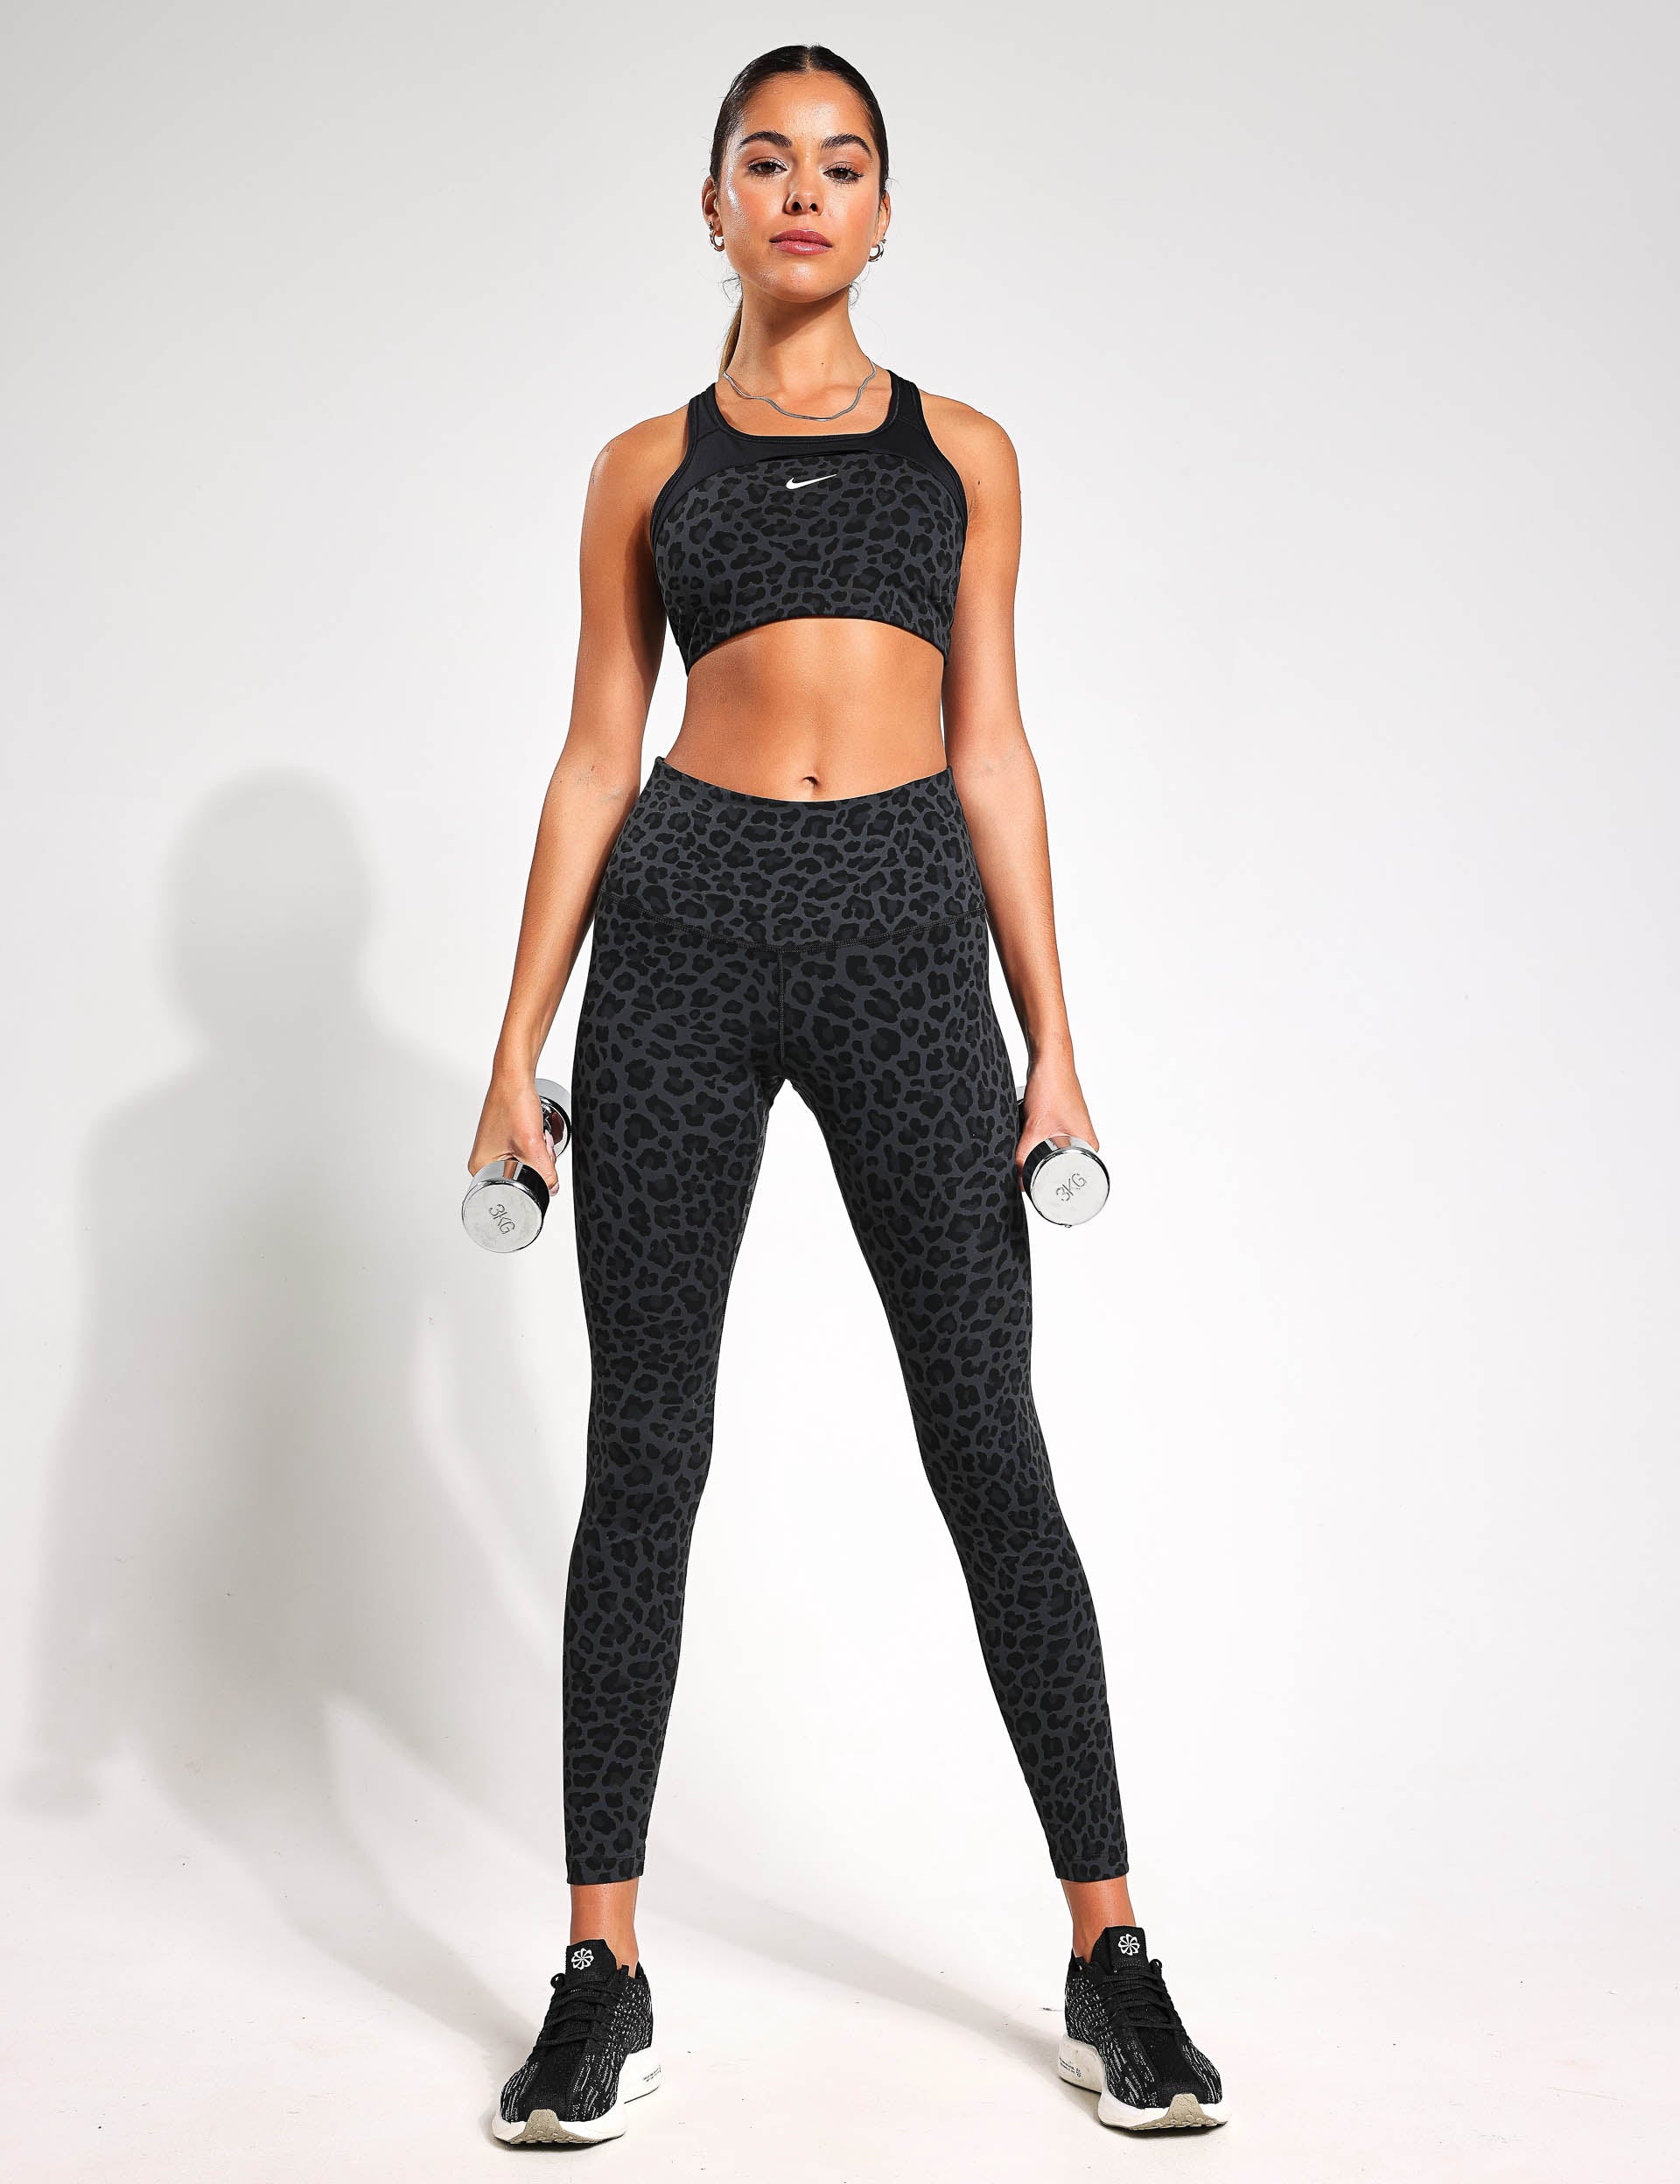 Nike Women's One Brown Multi Leopard Print HR Leggings (DM7274-256